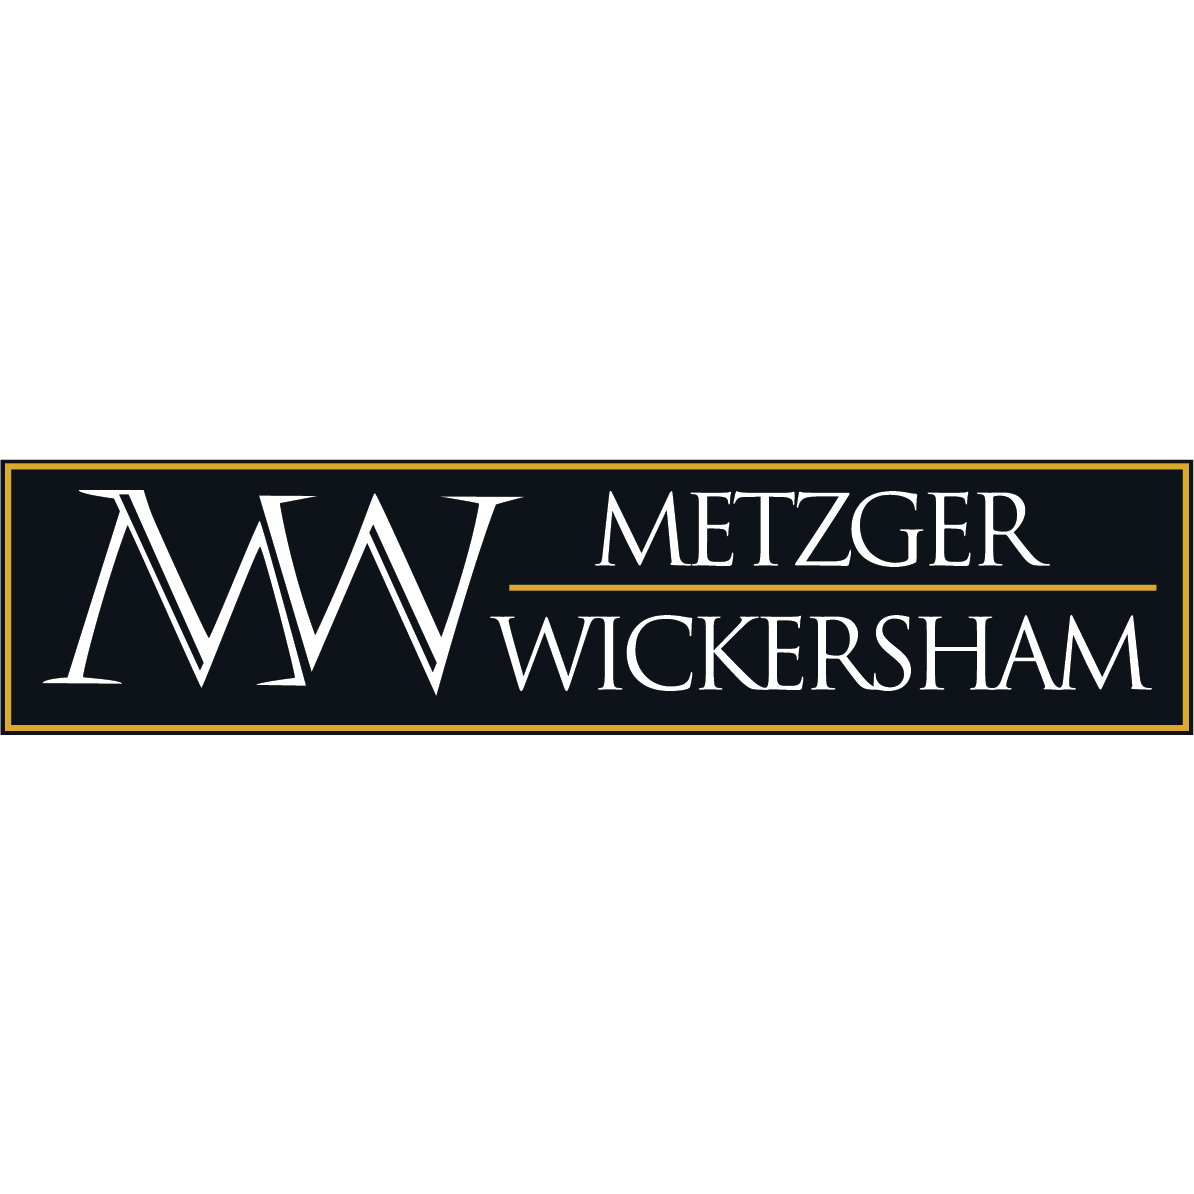 Metzger Wickersham - York, PA 17403 - (888)286-2850 | ShowMeLocal.com